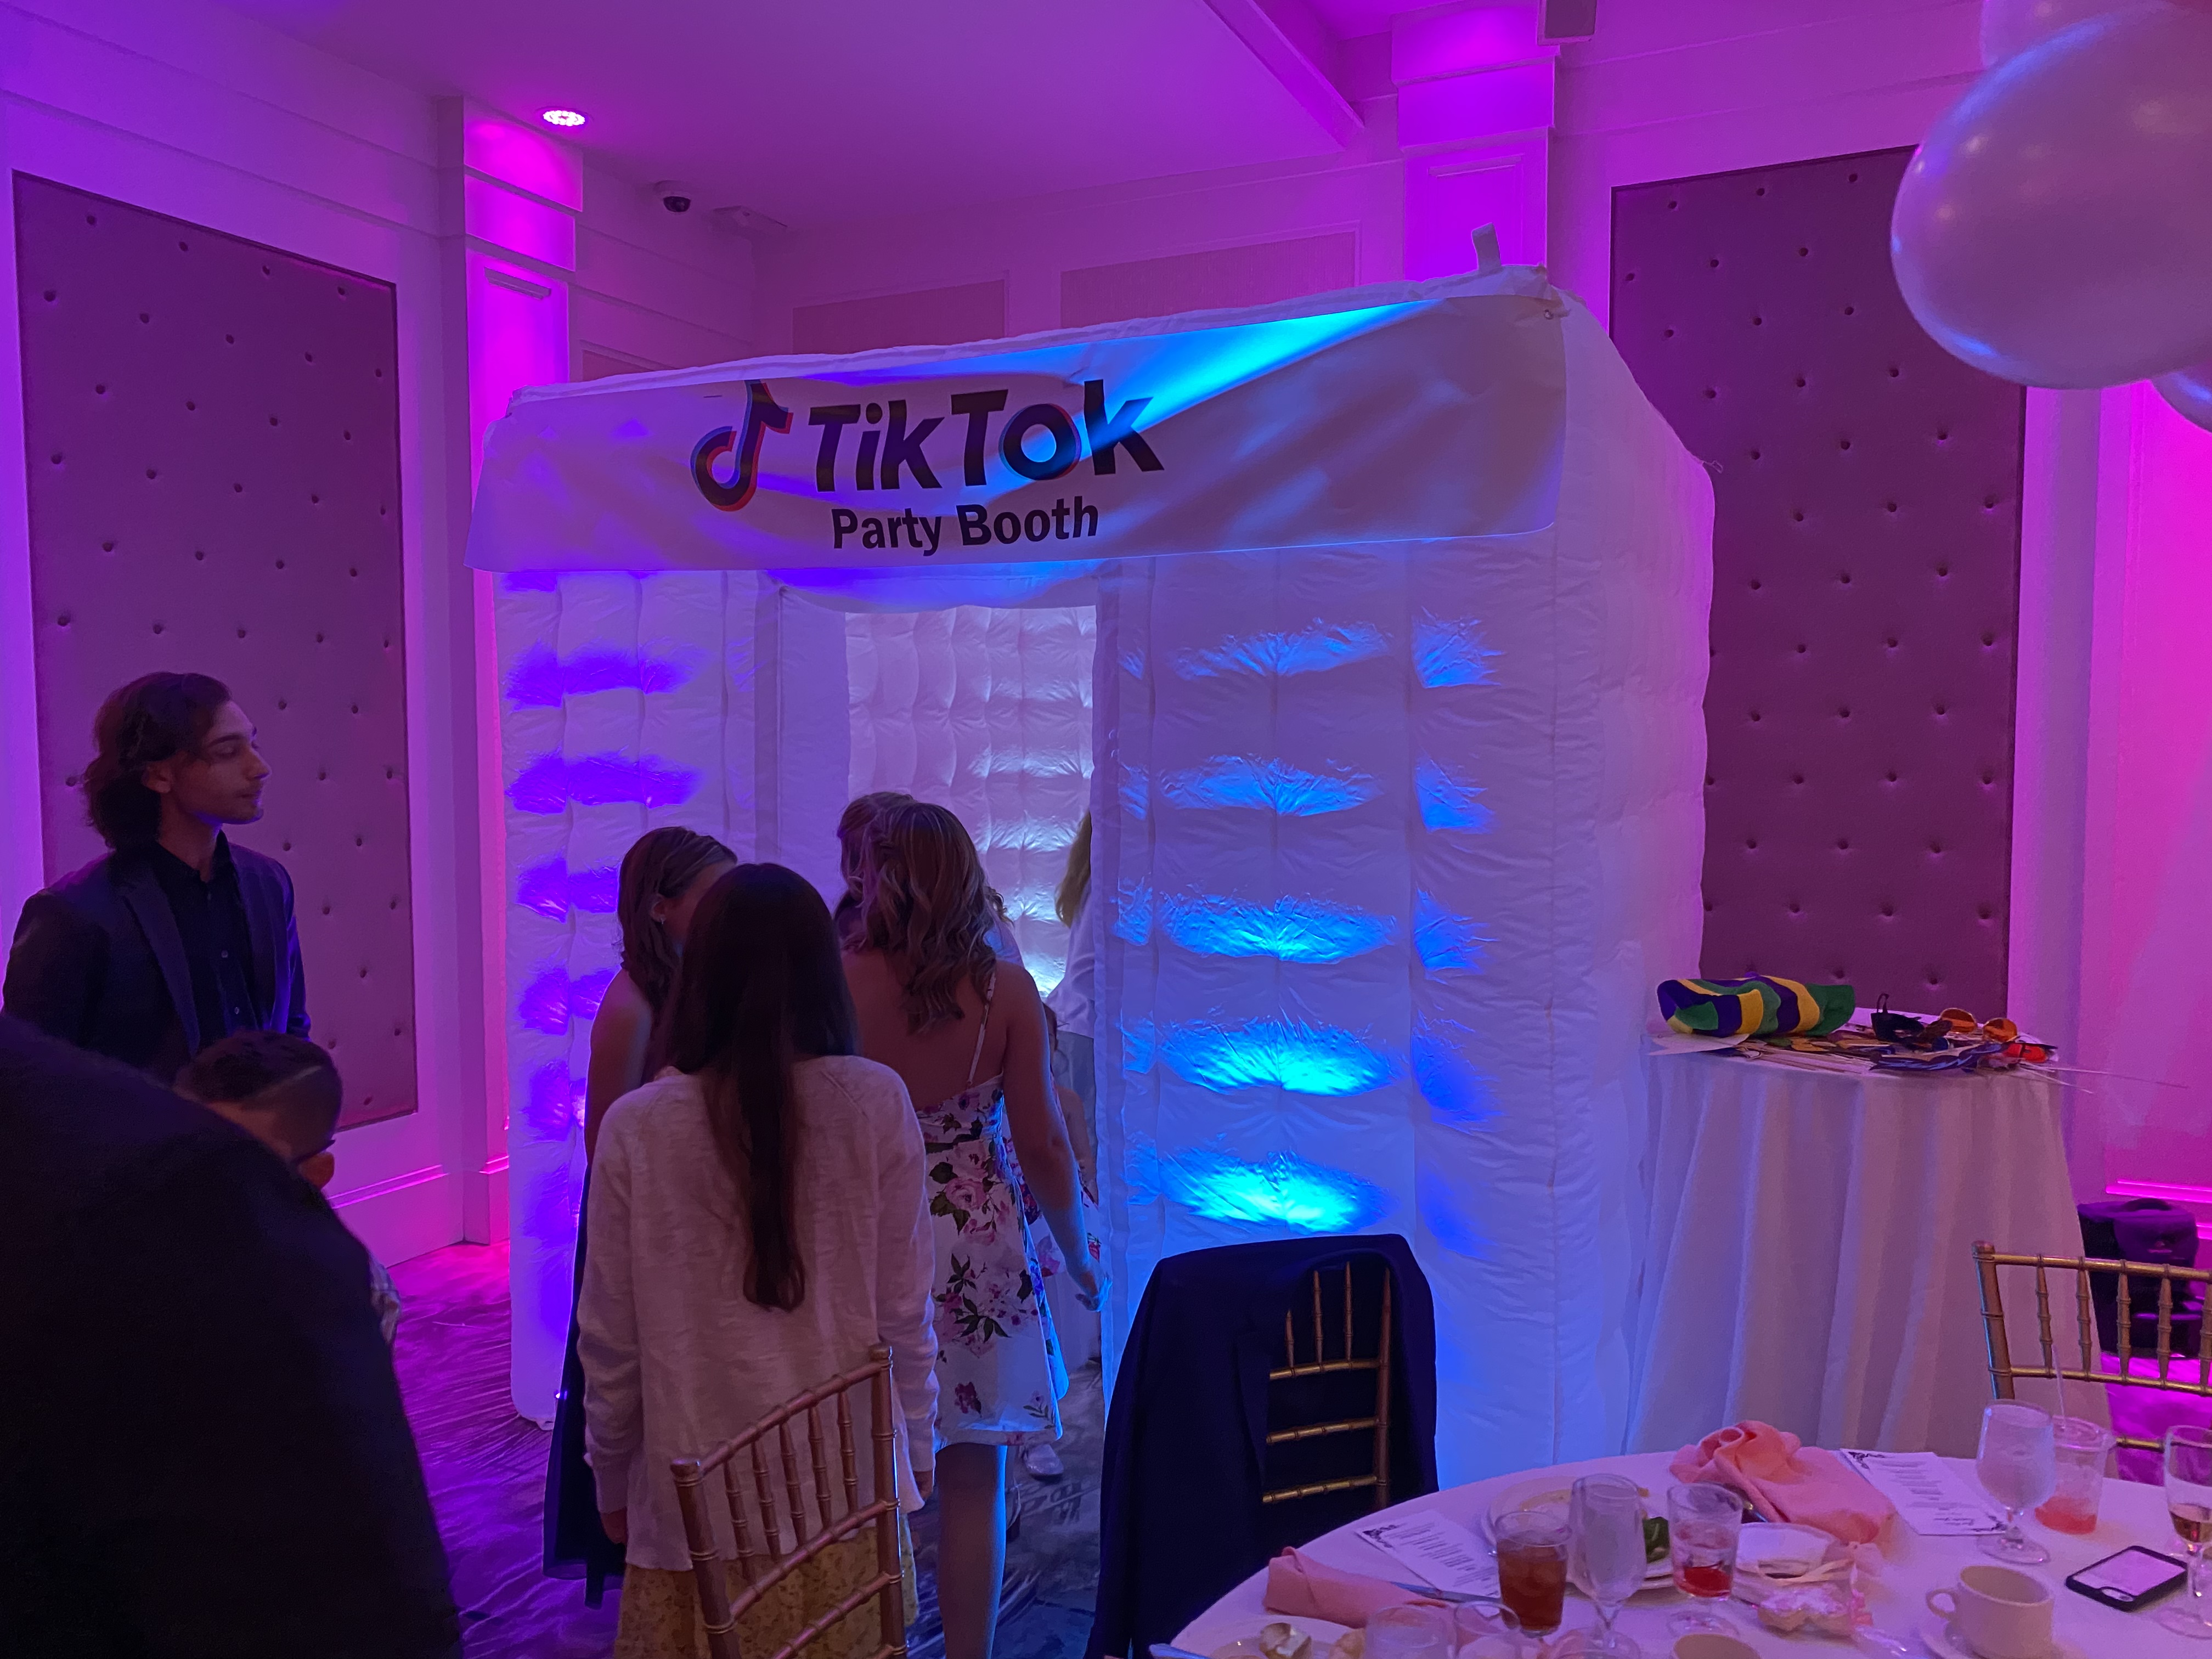 Tik Tok Party Booth